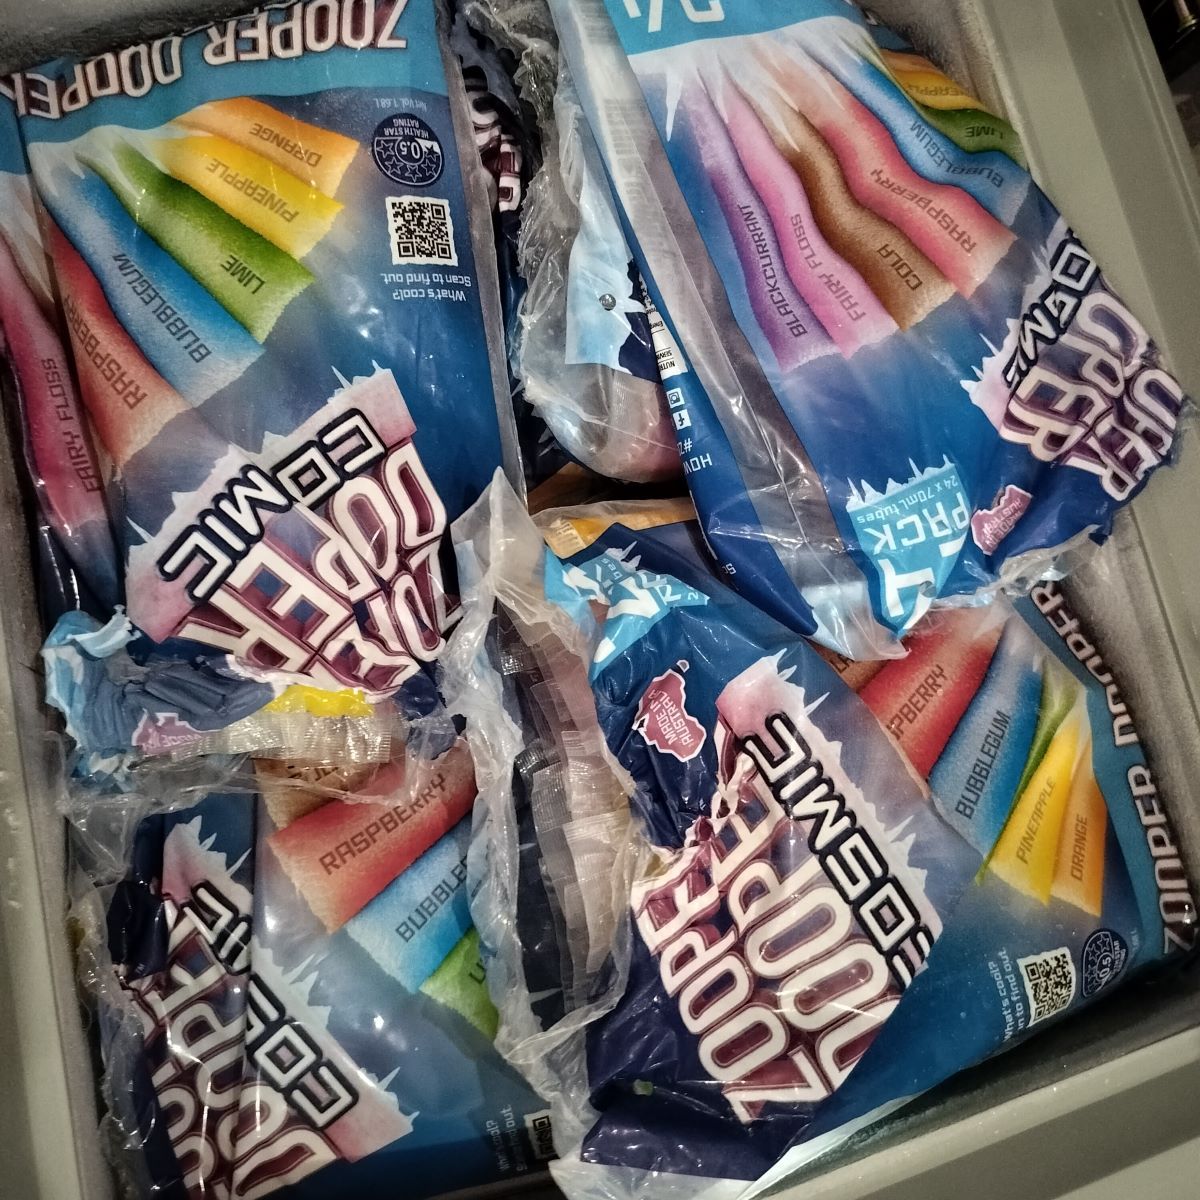 A freezer full of Zooper Dooper ice blocks. 